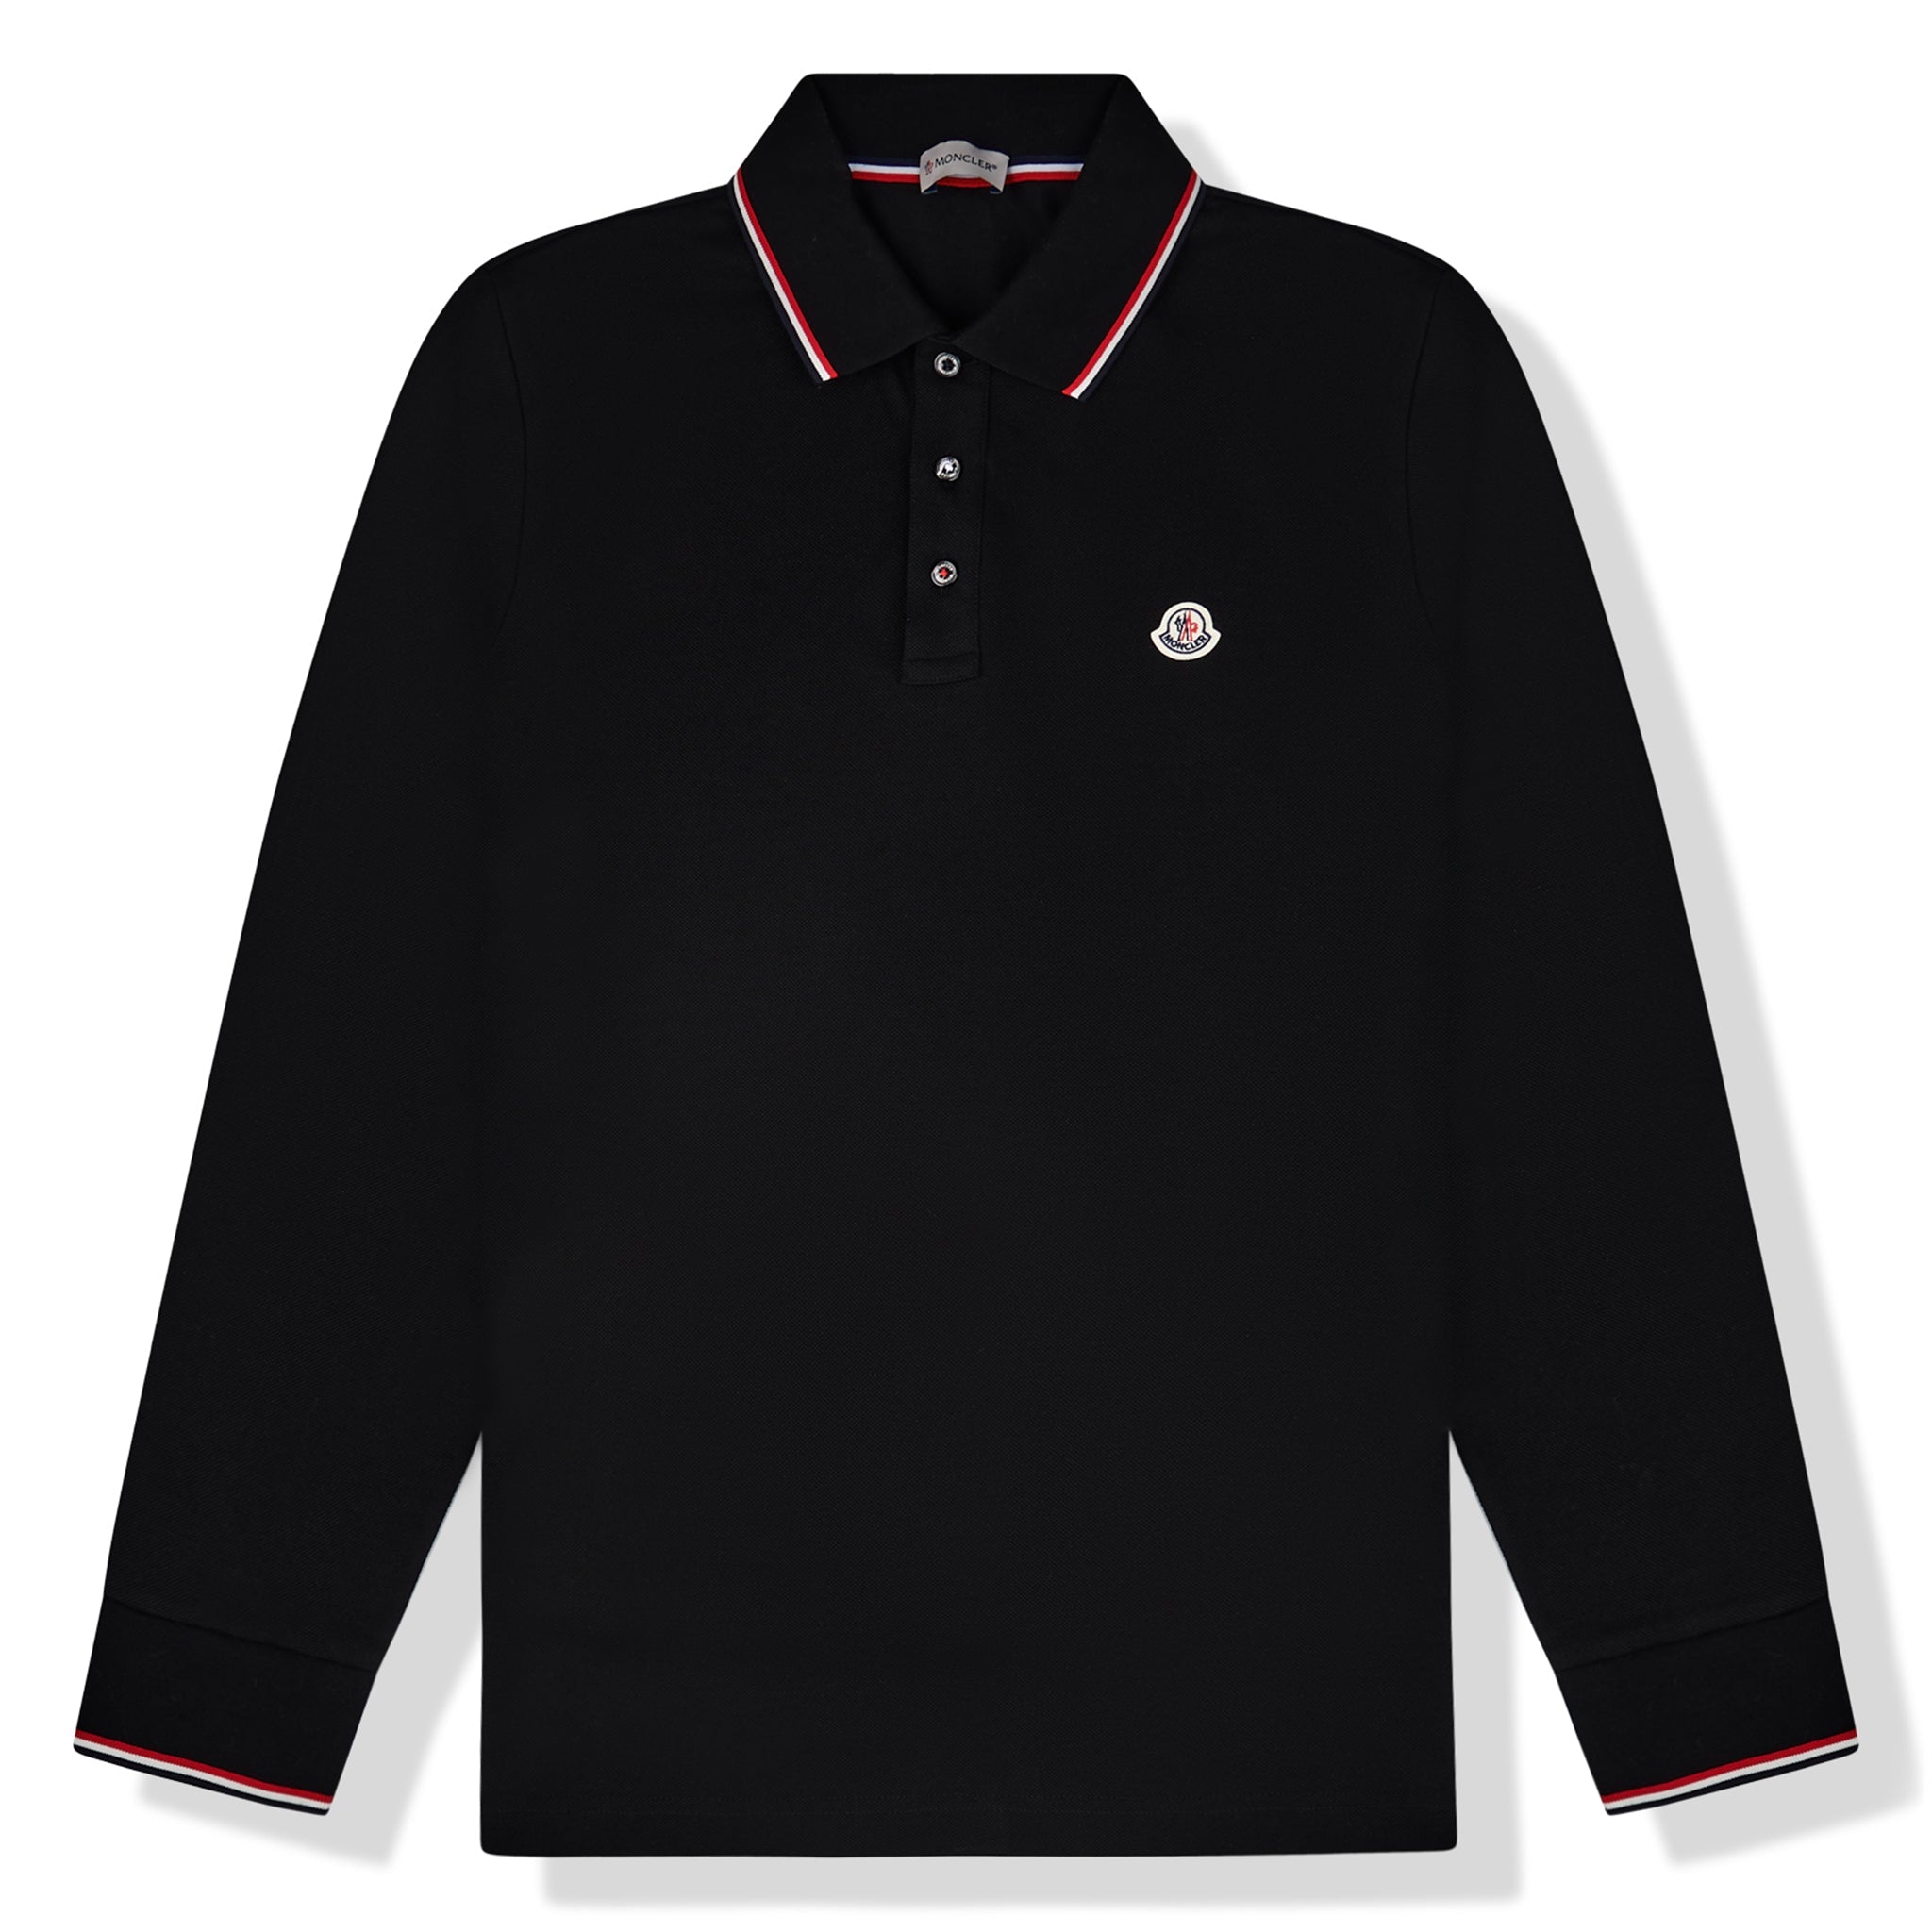 jordan polo shirt - Buy jordan polo shirt at Best Price in